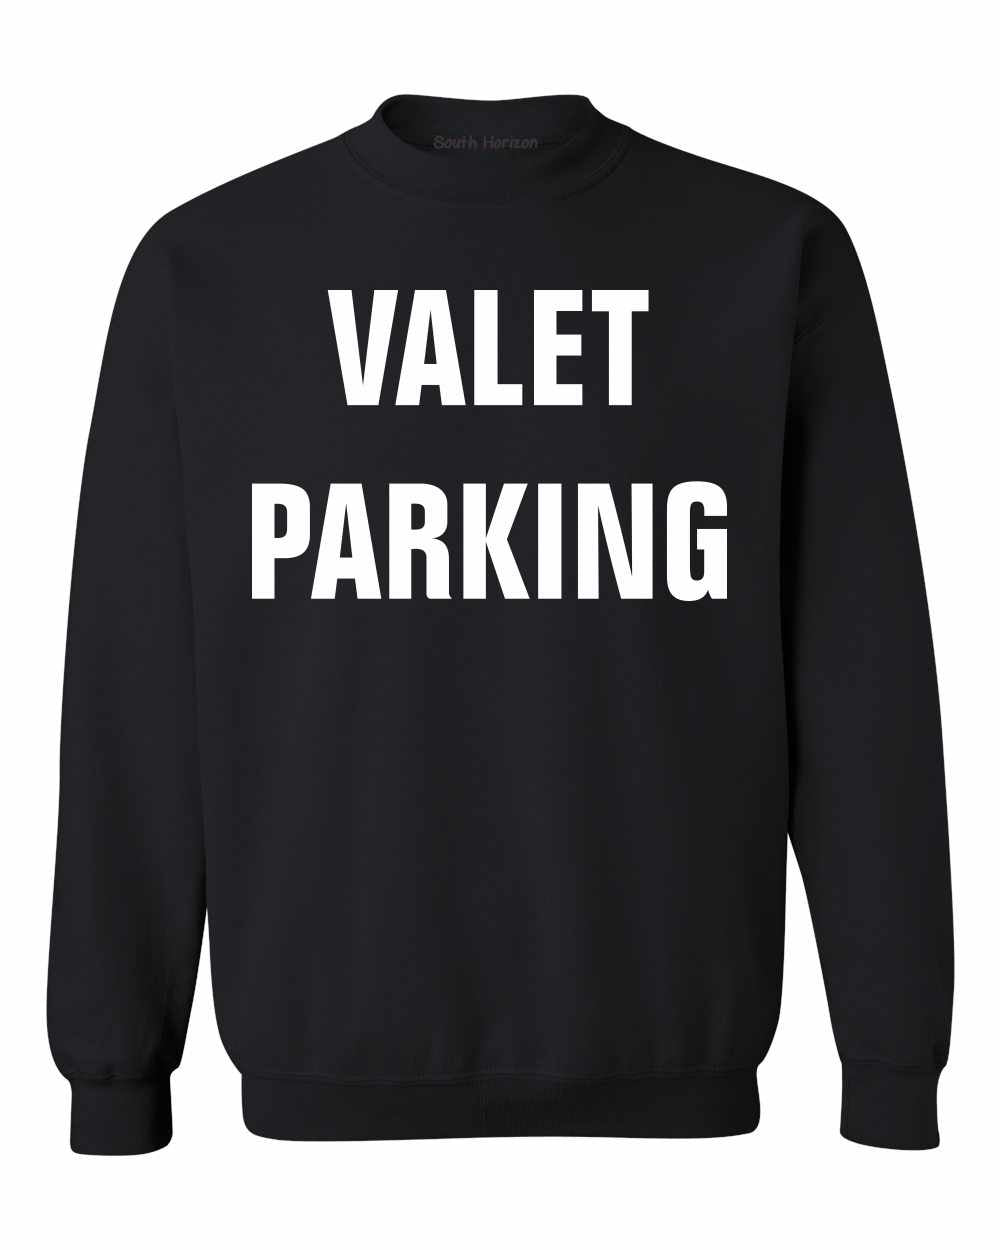 VALET PARKING on SweatShirt